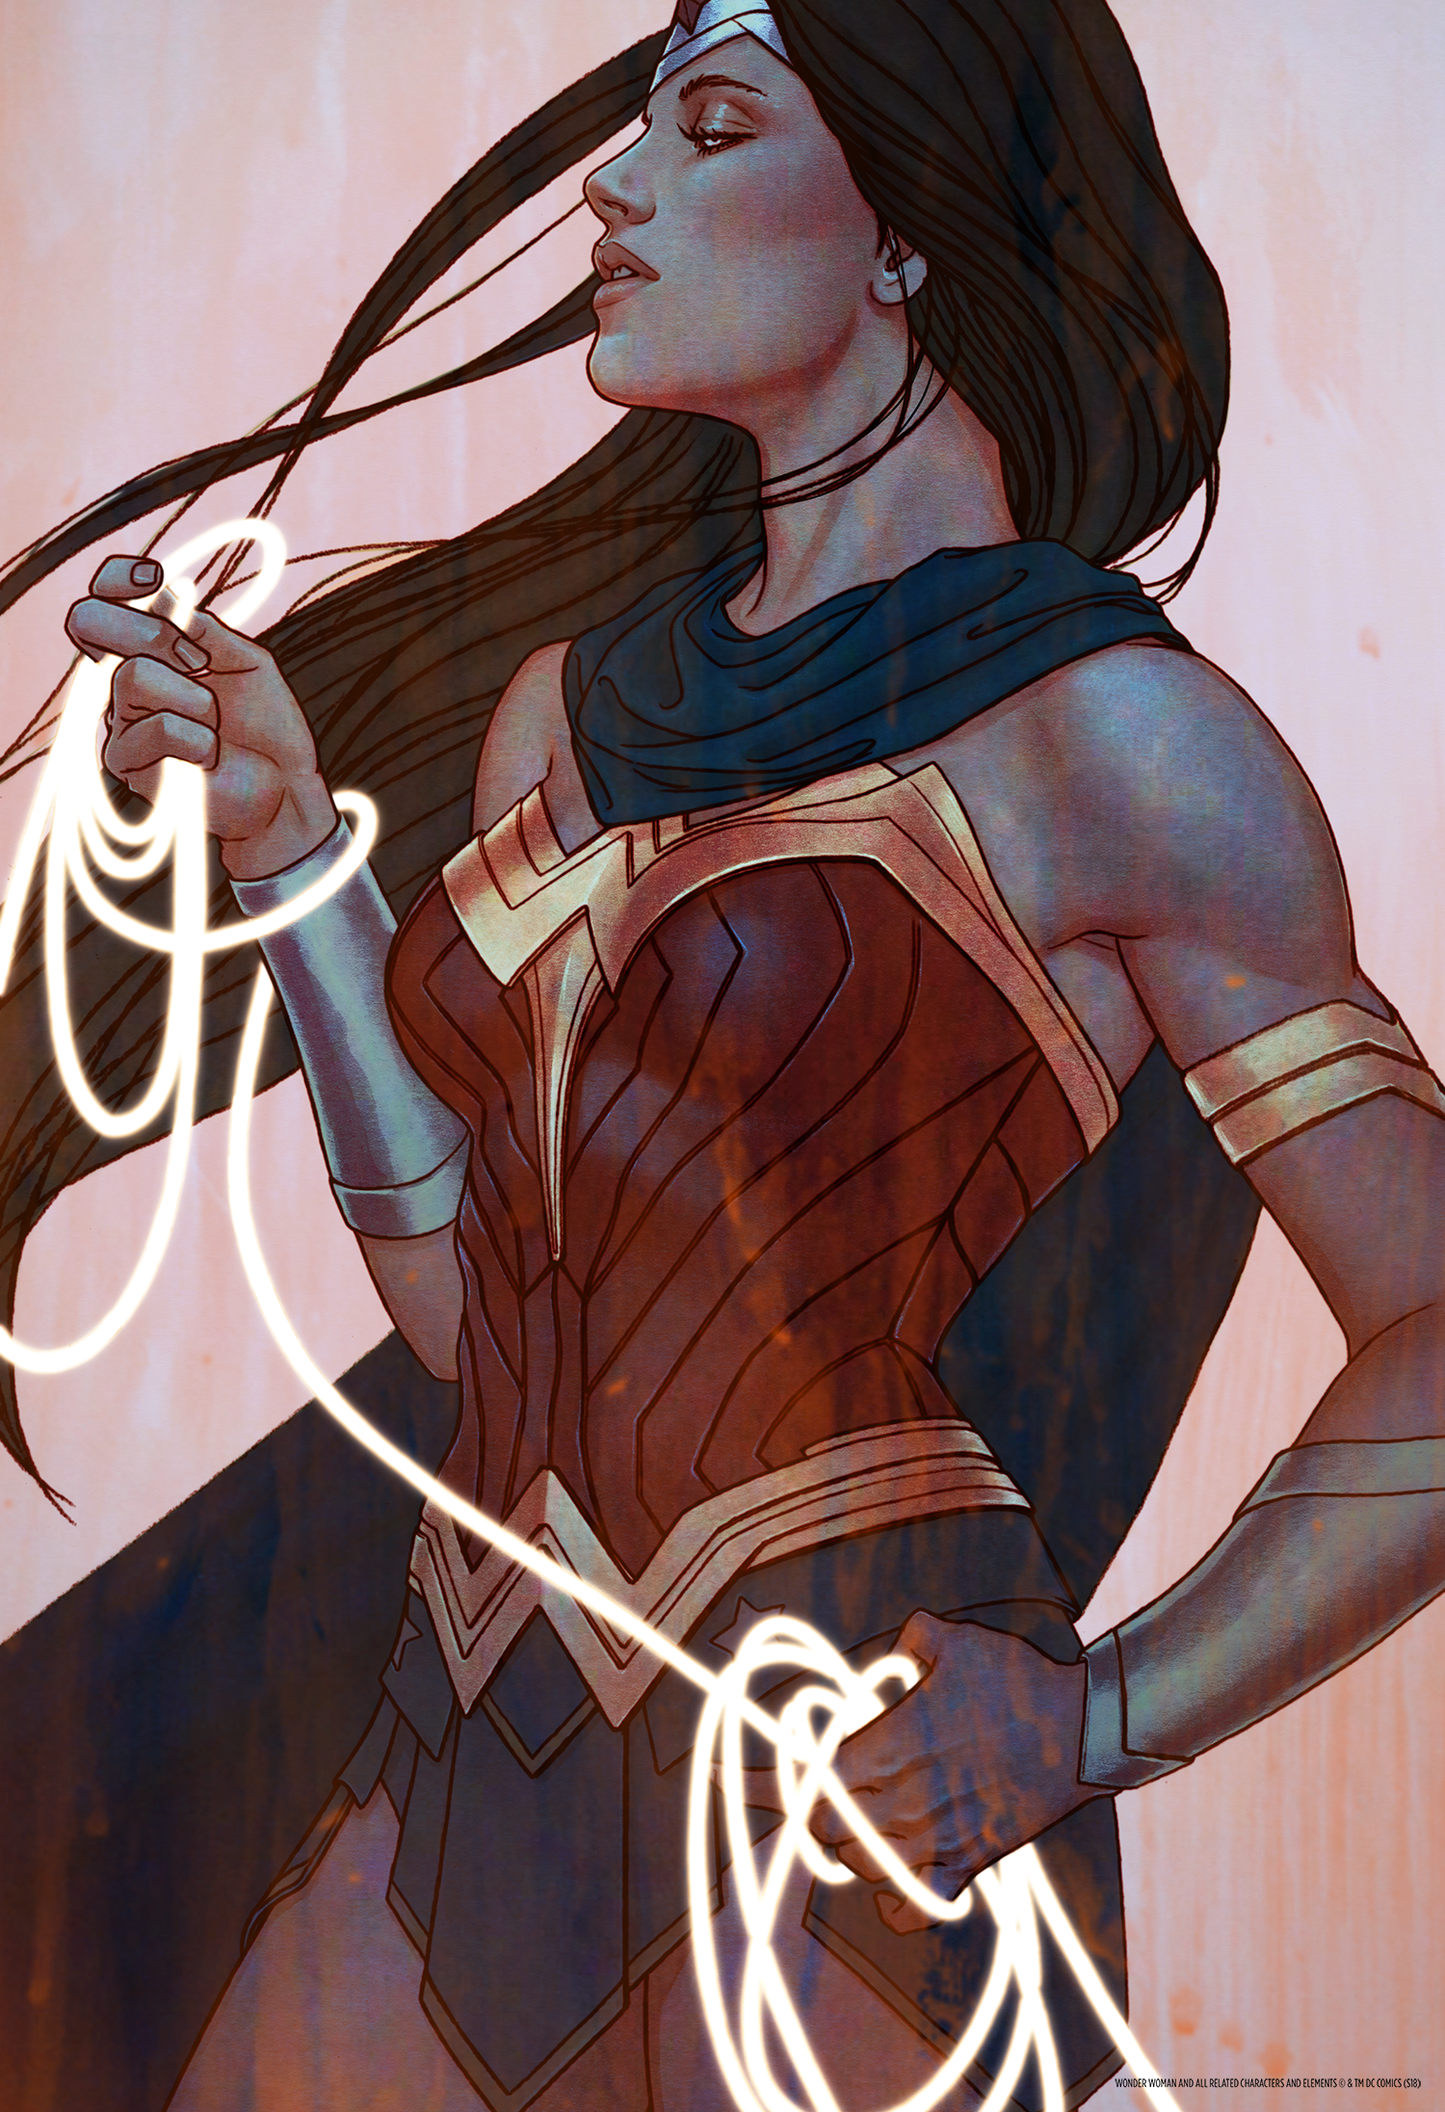 Jenny Frison "Wonder Woman #7 Cover"